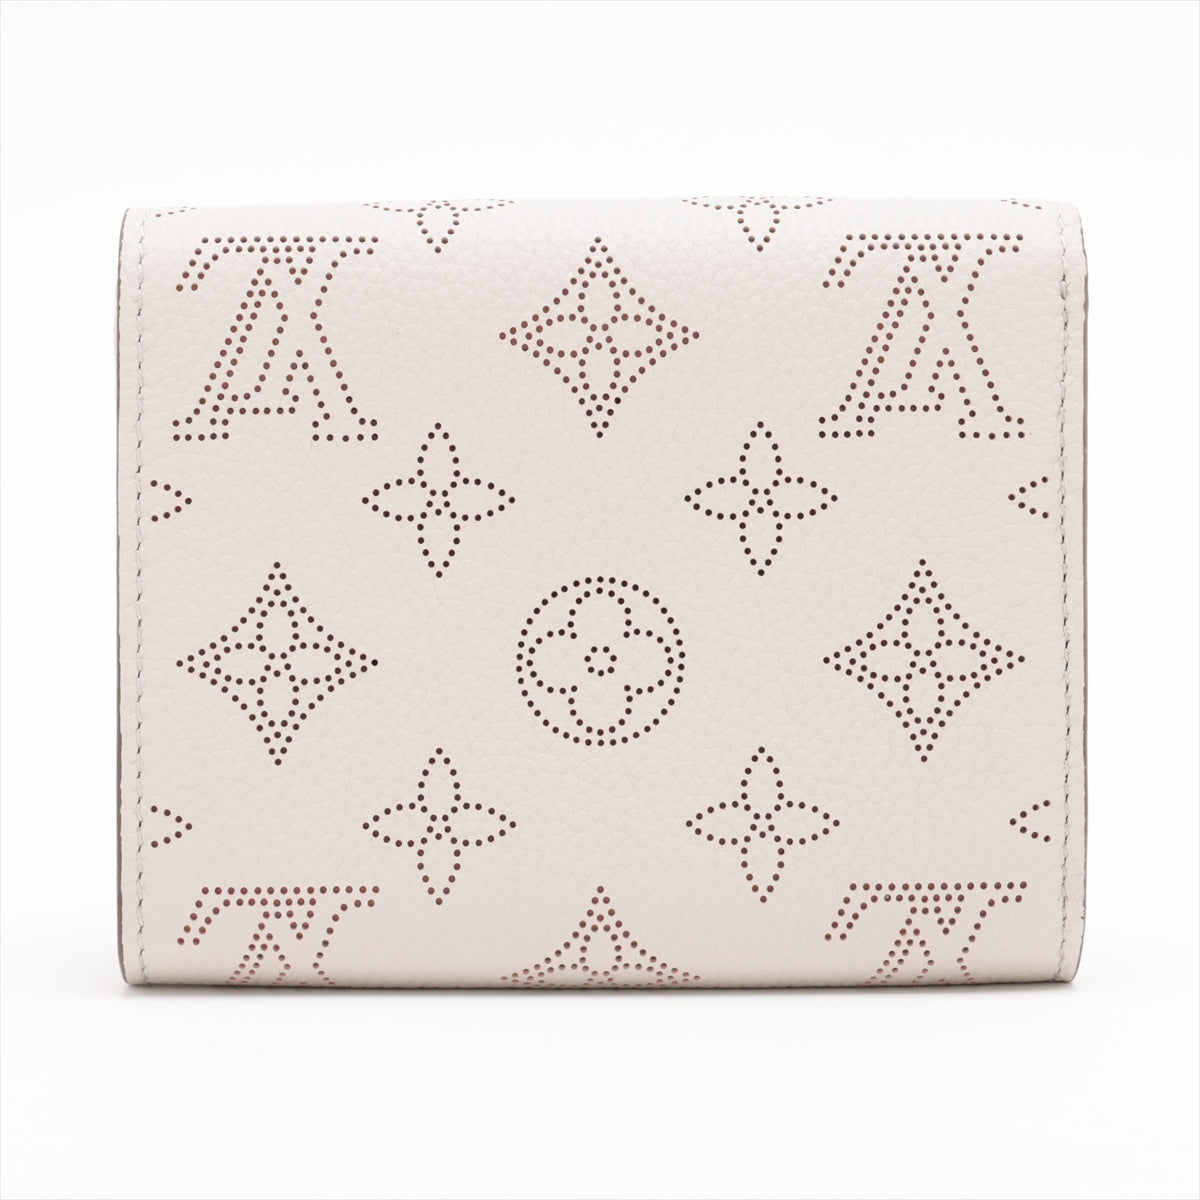 Louis Vuitton Mahina Portefeuille Iris Compact M80316 Pink x gray Wallet